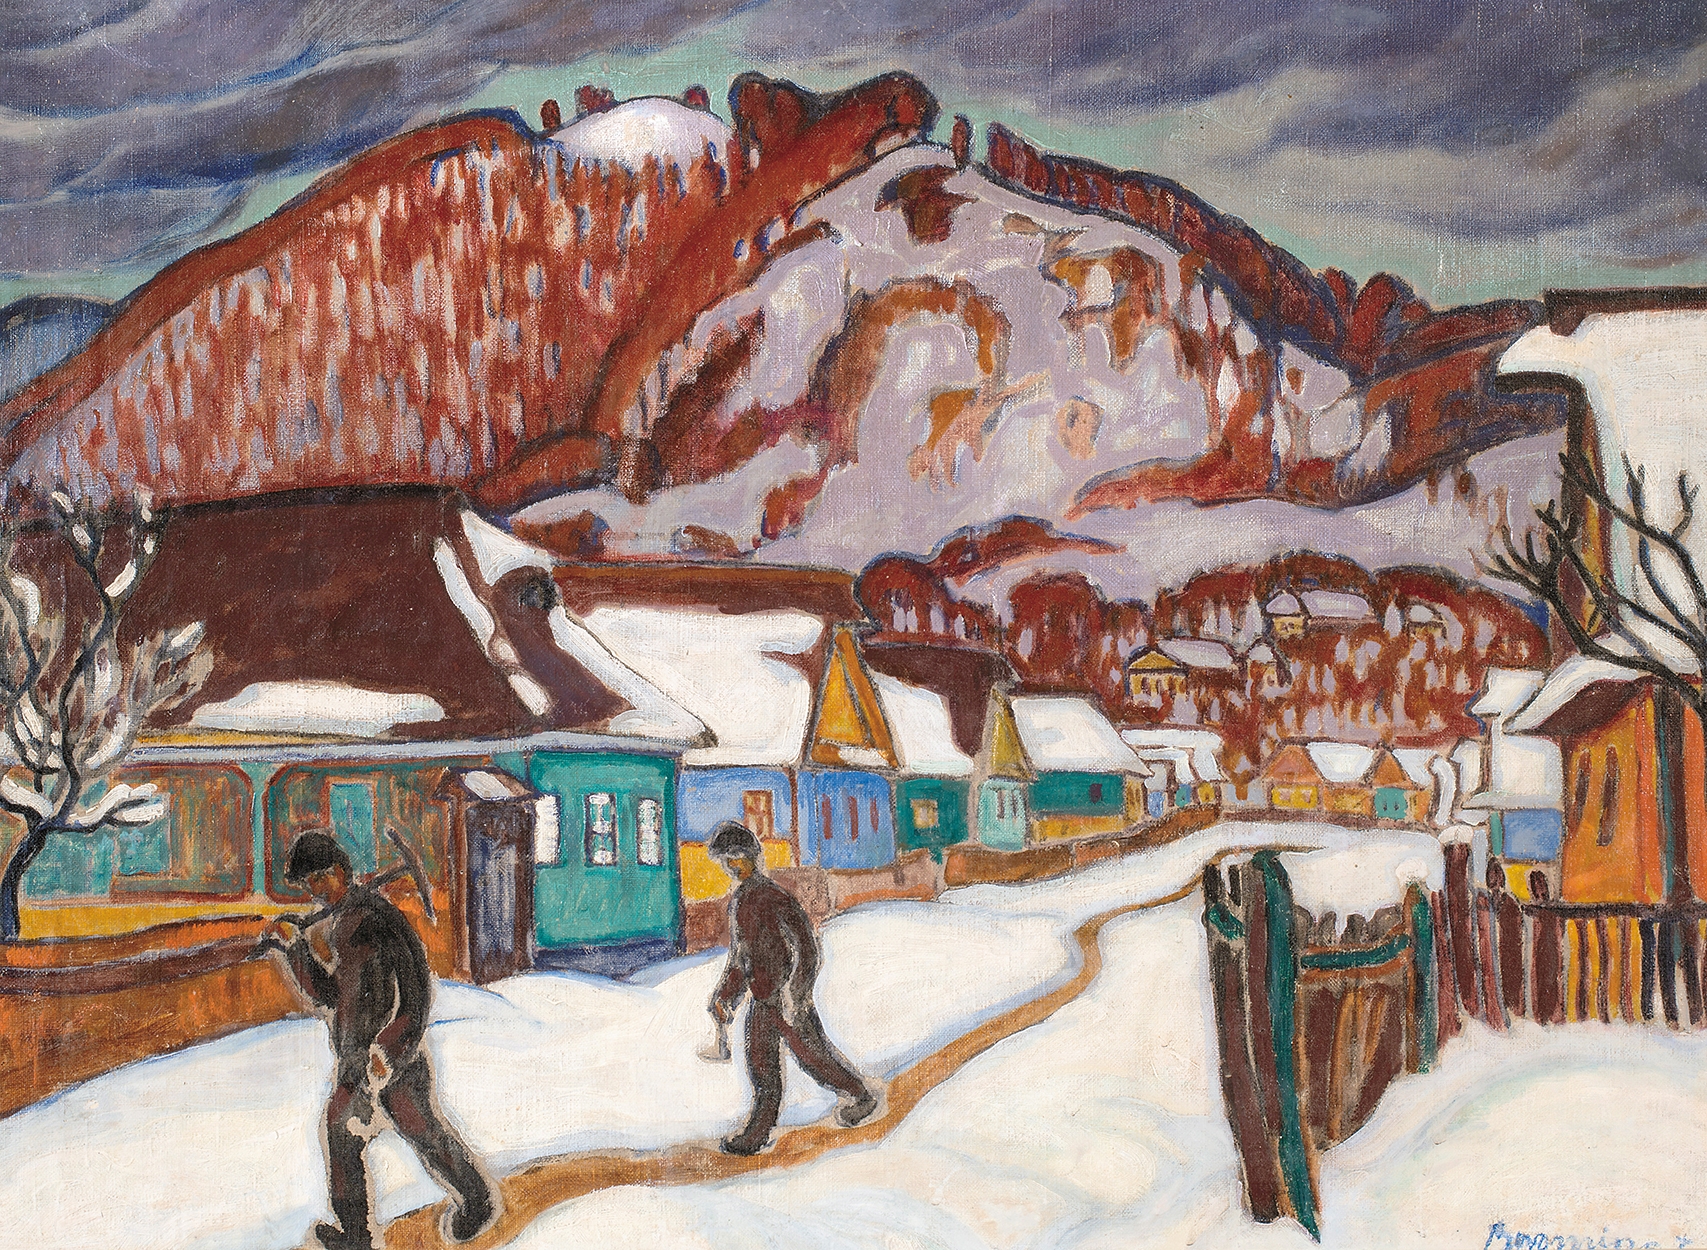 Boromisza Tibor (1880-1960) Veresvíz, Houses of Miners on a cold winter day, 1911